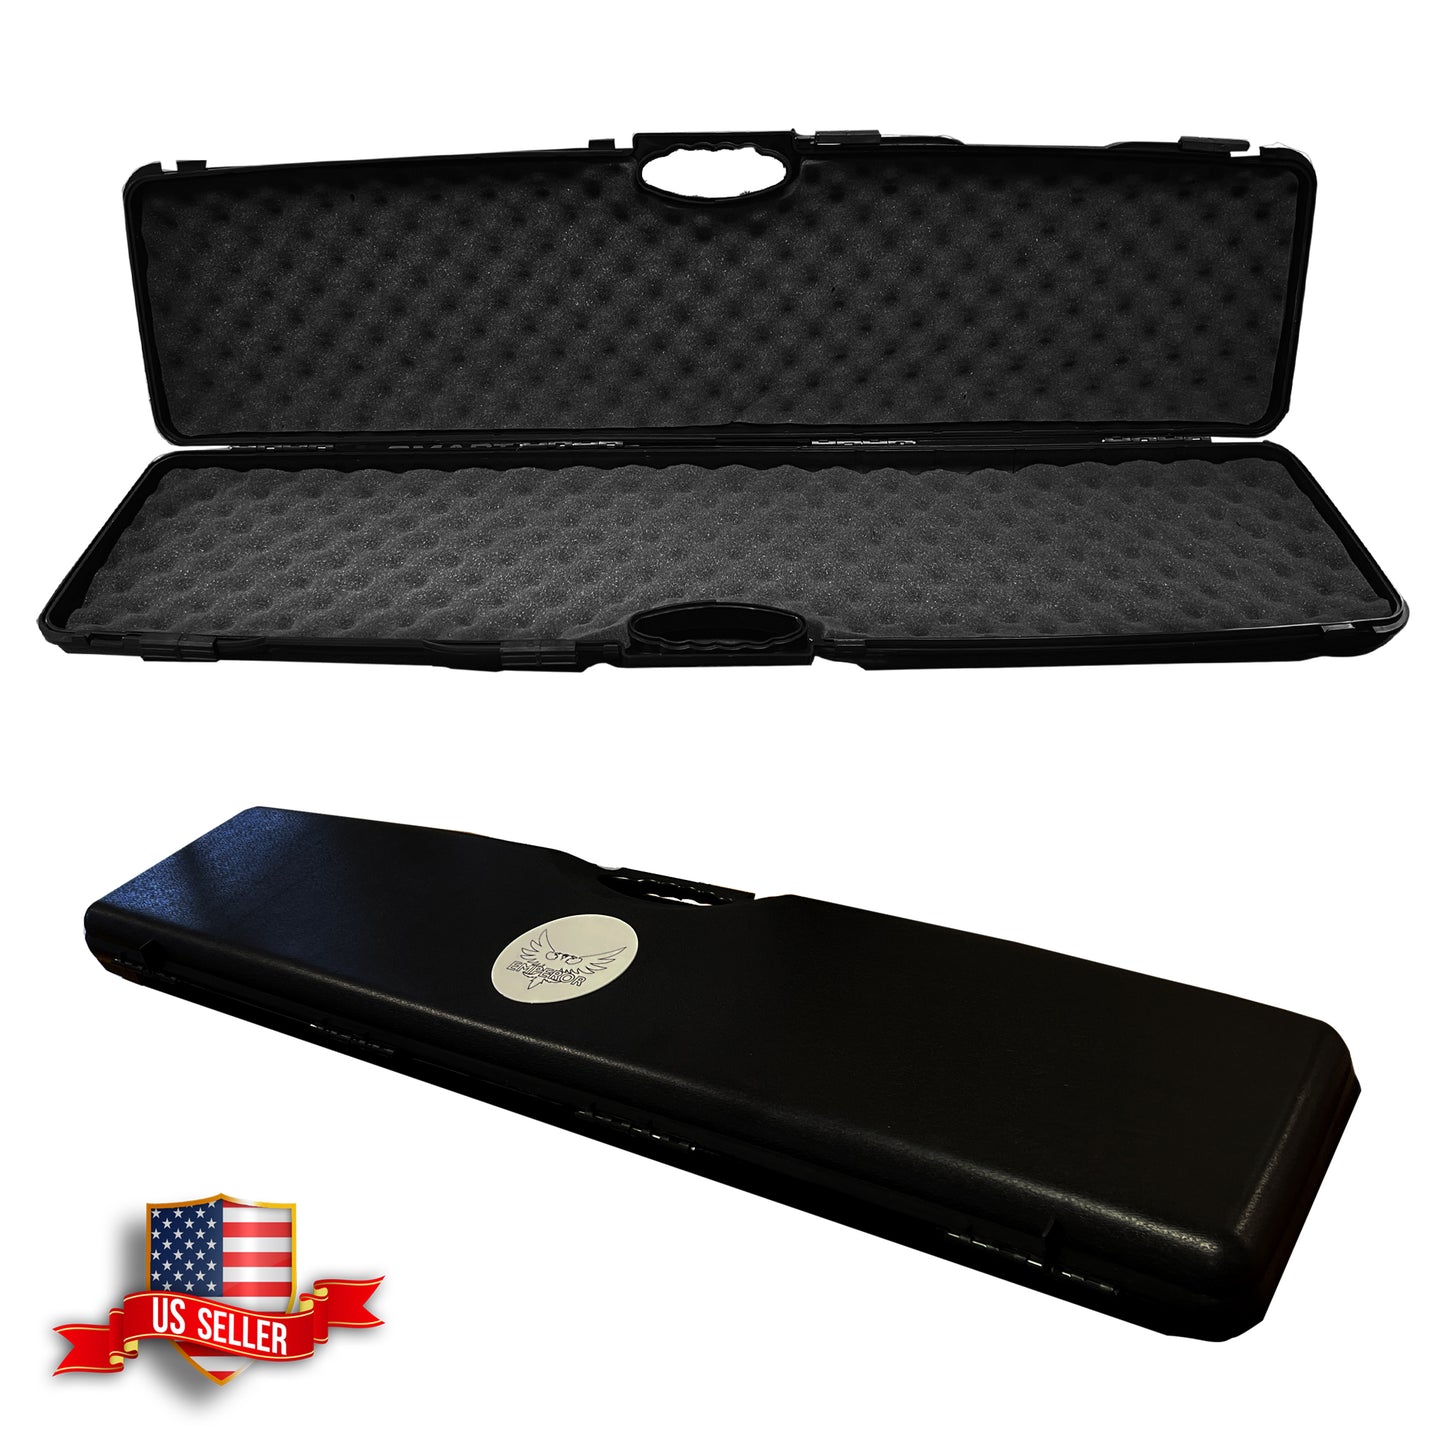 5 PCS SET | Emperor Single Scope Hard Plastic Rifle Case with Foam | 43" x 10" x 3" Scratch Resistant Storage Case - Dual Layers of Soft Egg Crate Foam